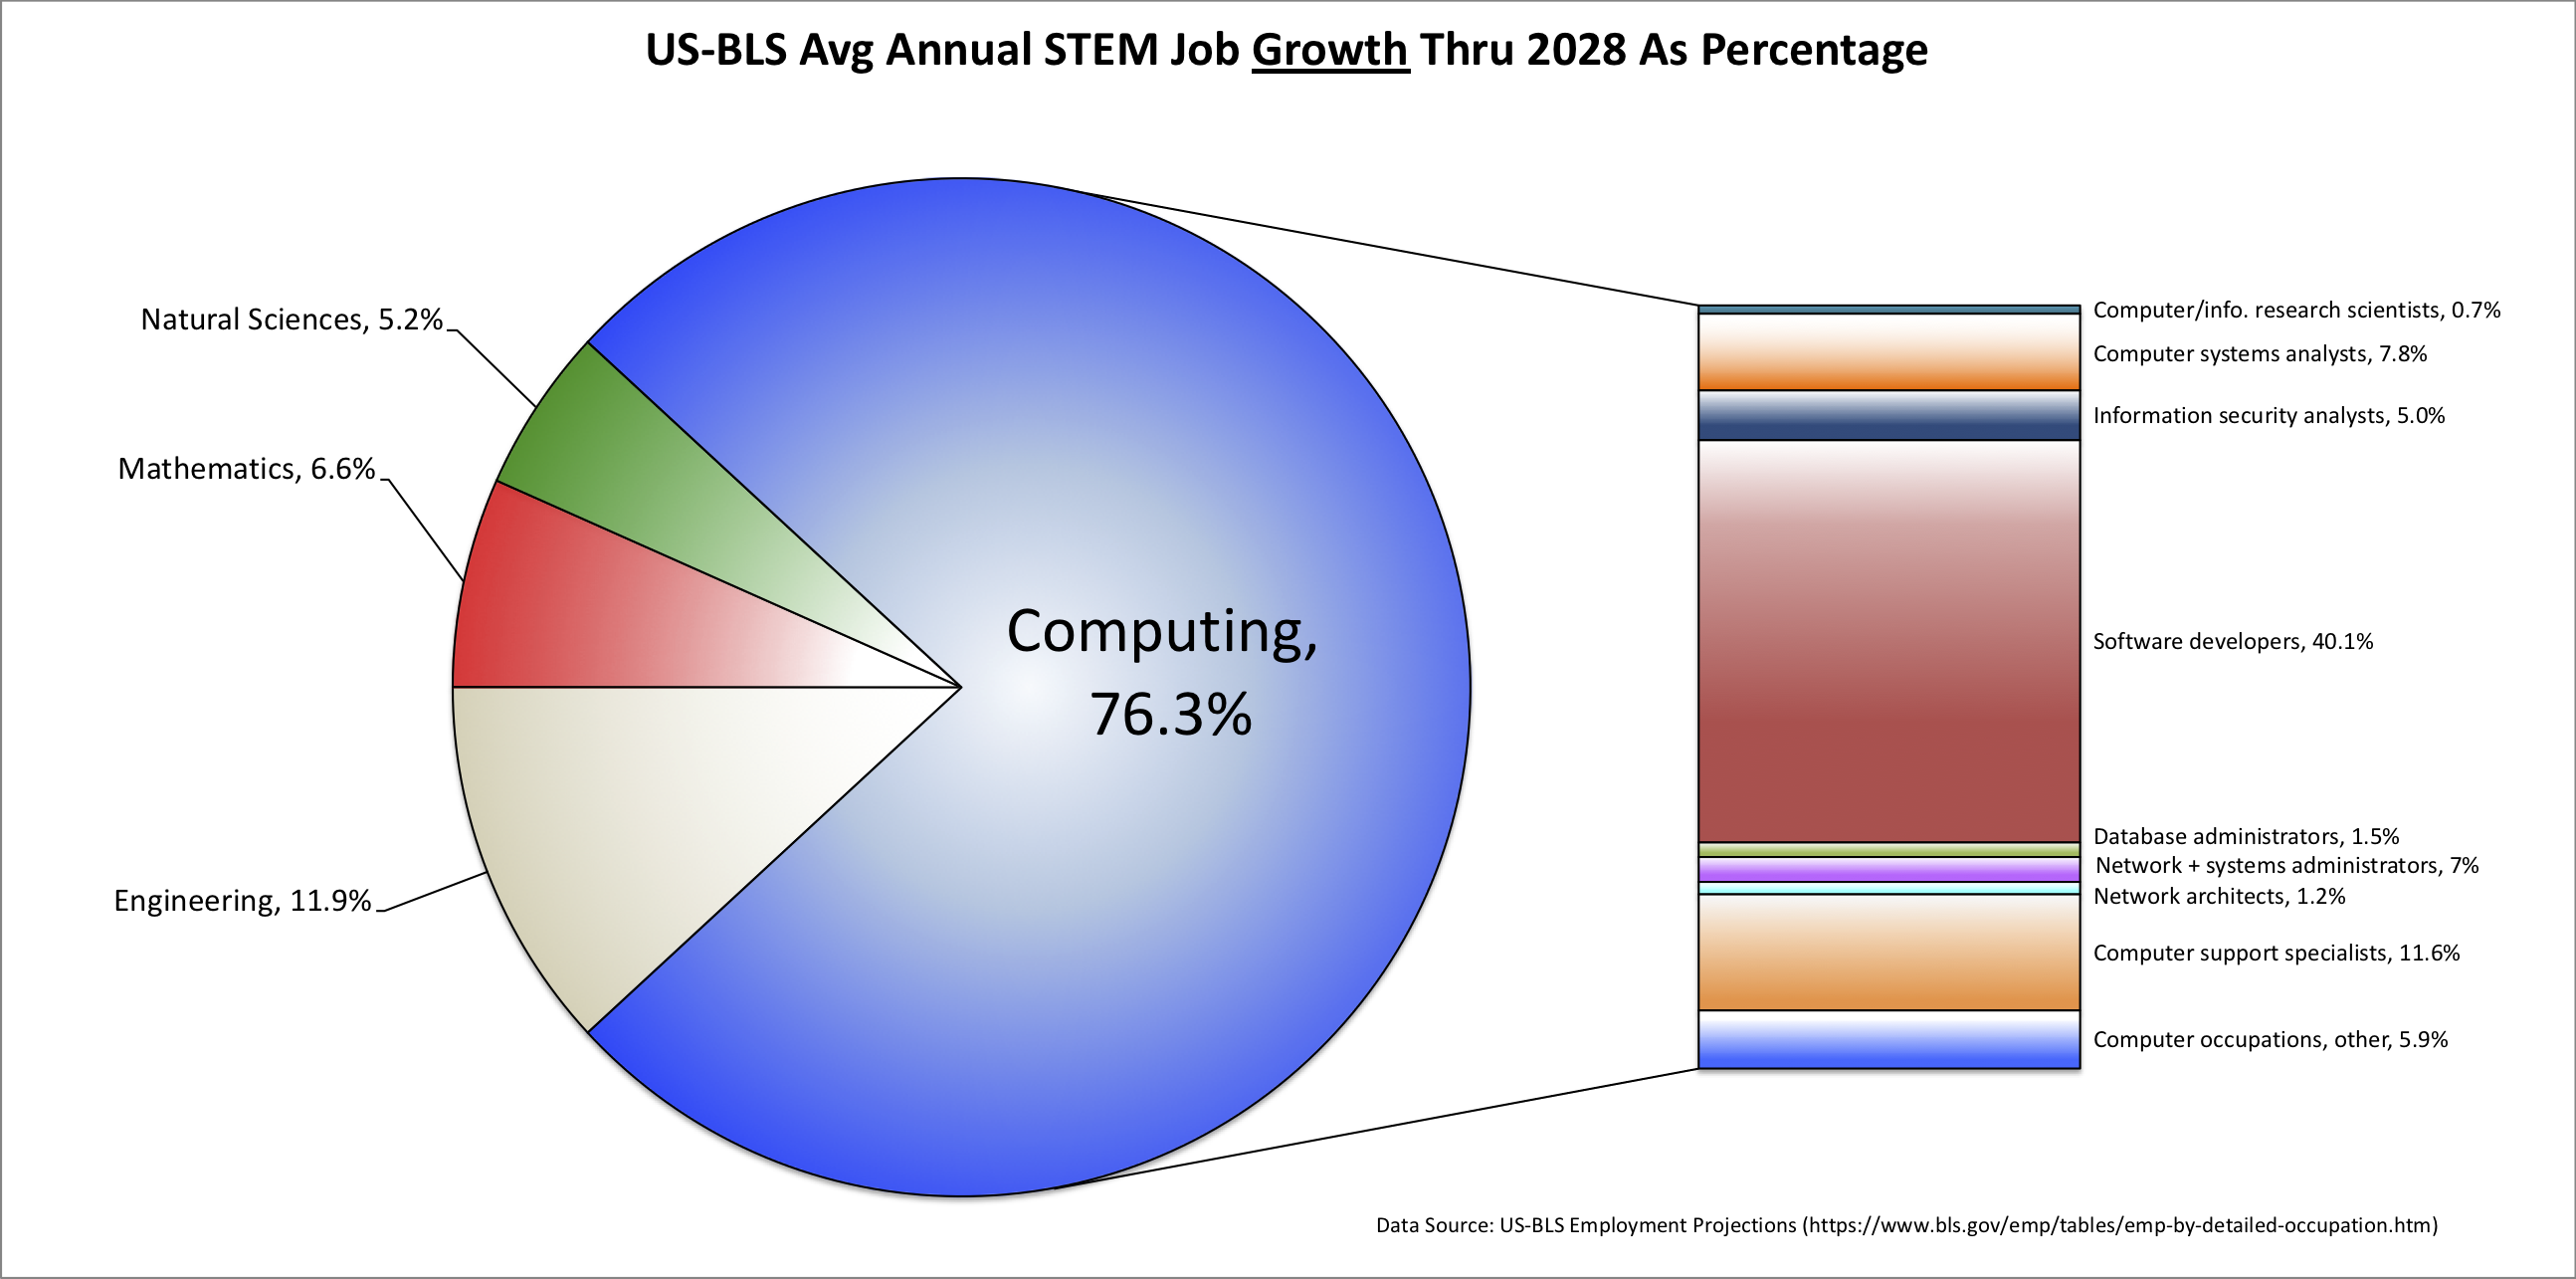 US-BLS Average Annual STEM Jobs Growth through 2028 As Percentage